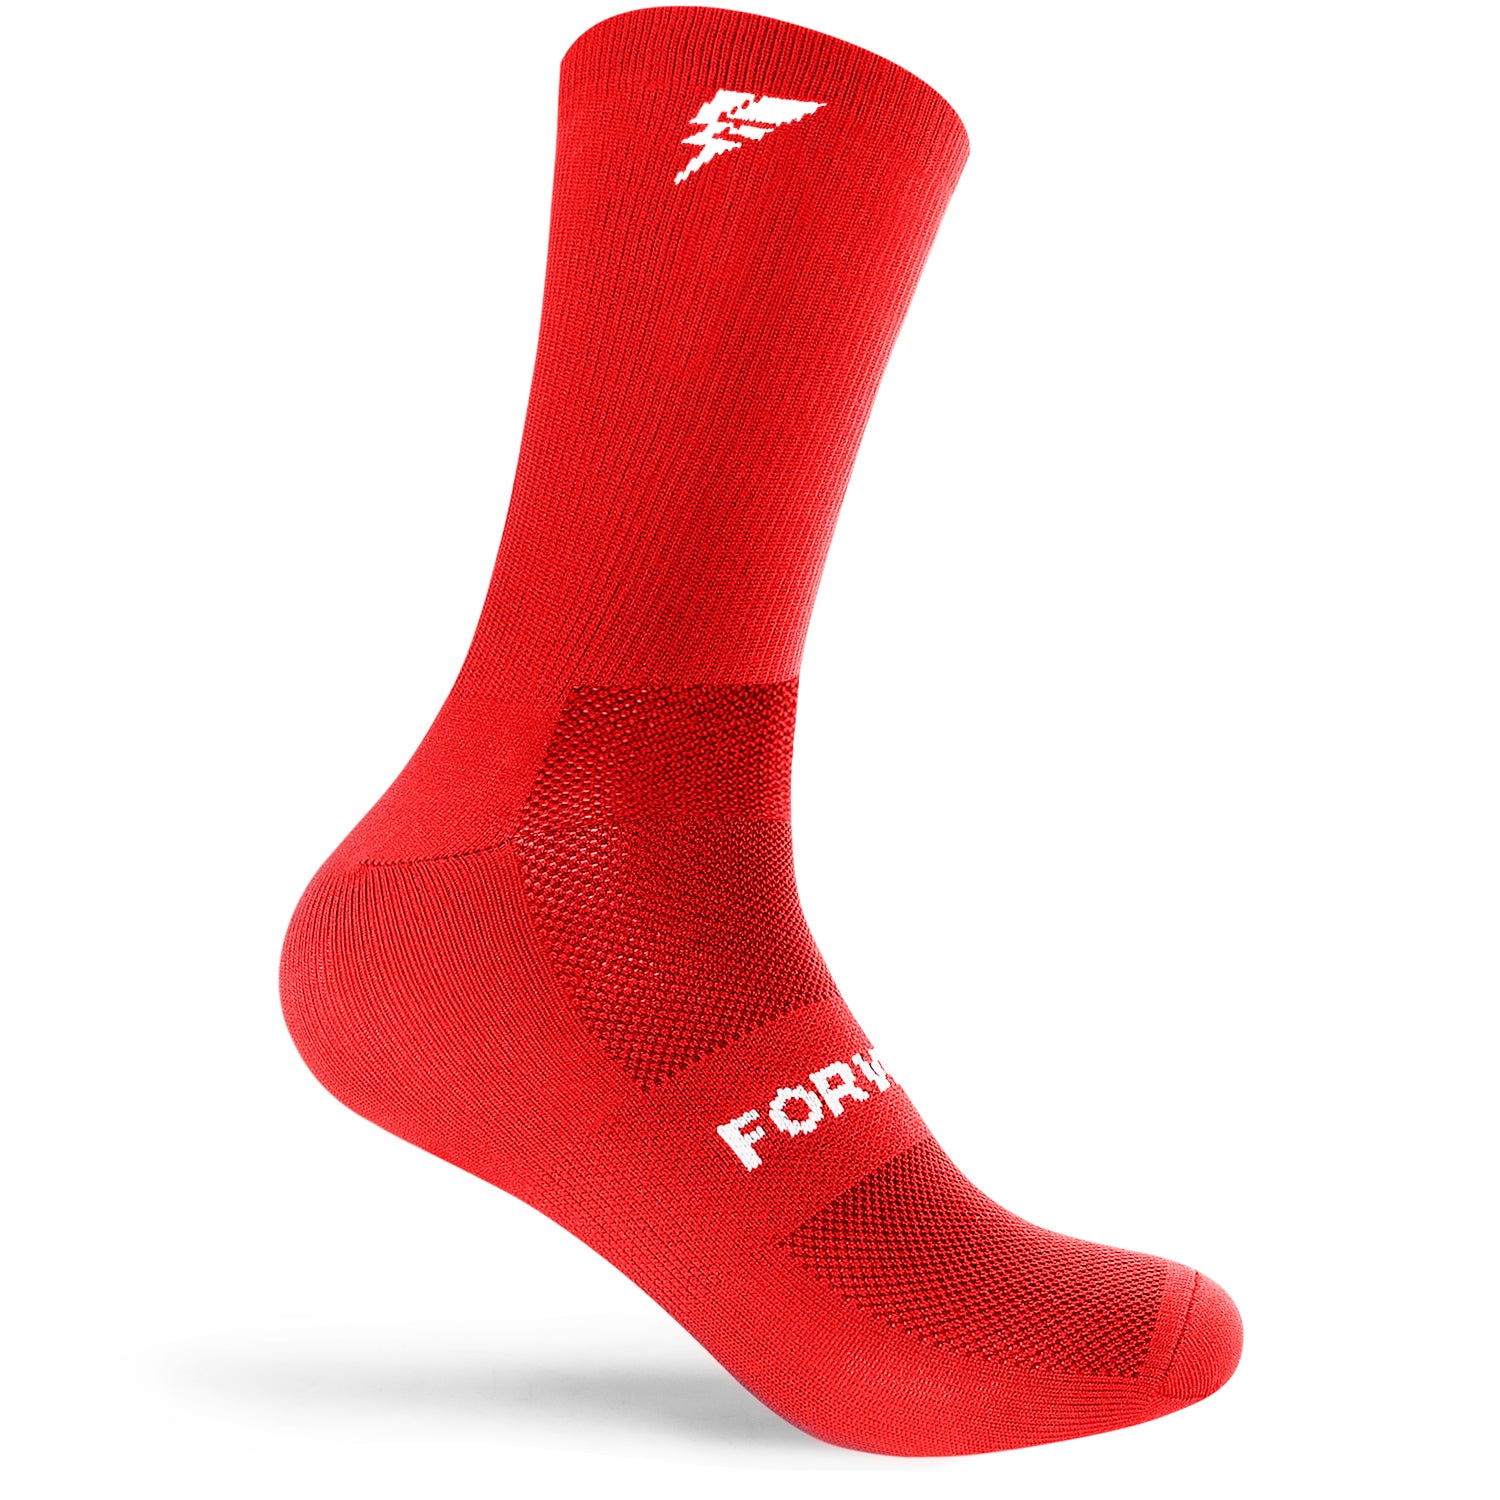 Forward Lightning Cycling Socks (Red) - Zol Cycling